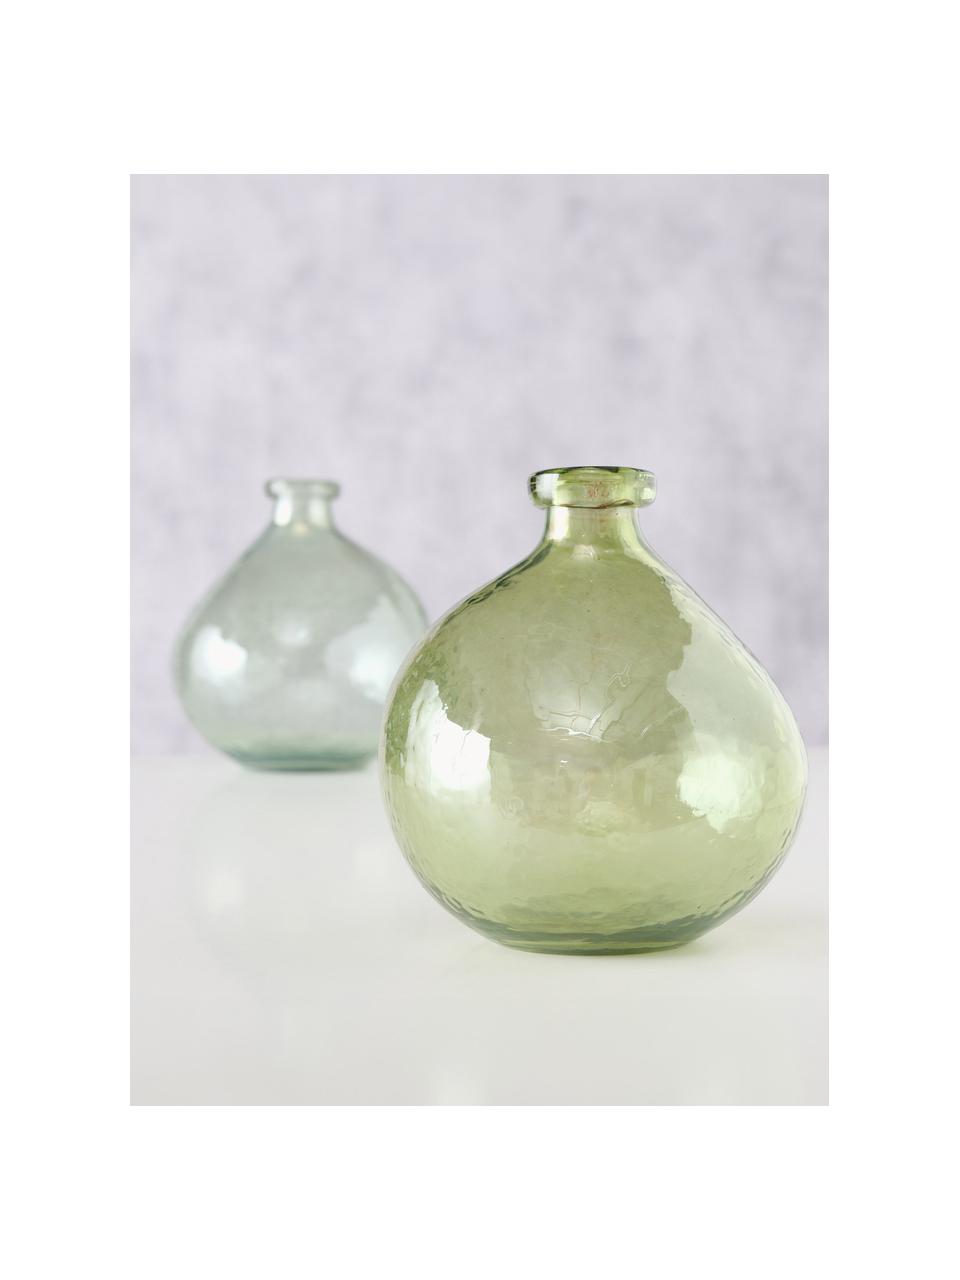 Sada skleněných váz Sligo, 2 díly, Sklo, Odstíny zelené, transparentní, Ø 16 cm, V 18 cm